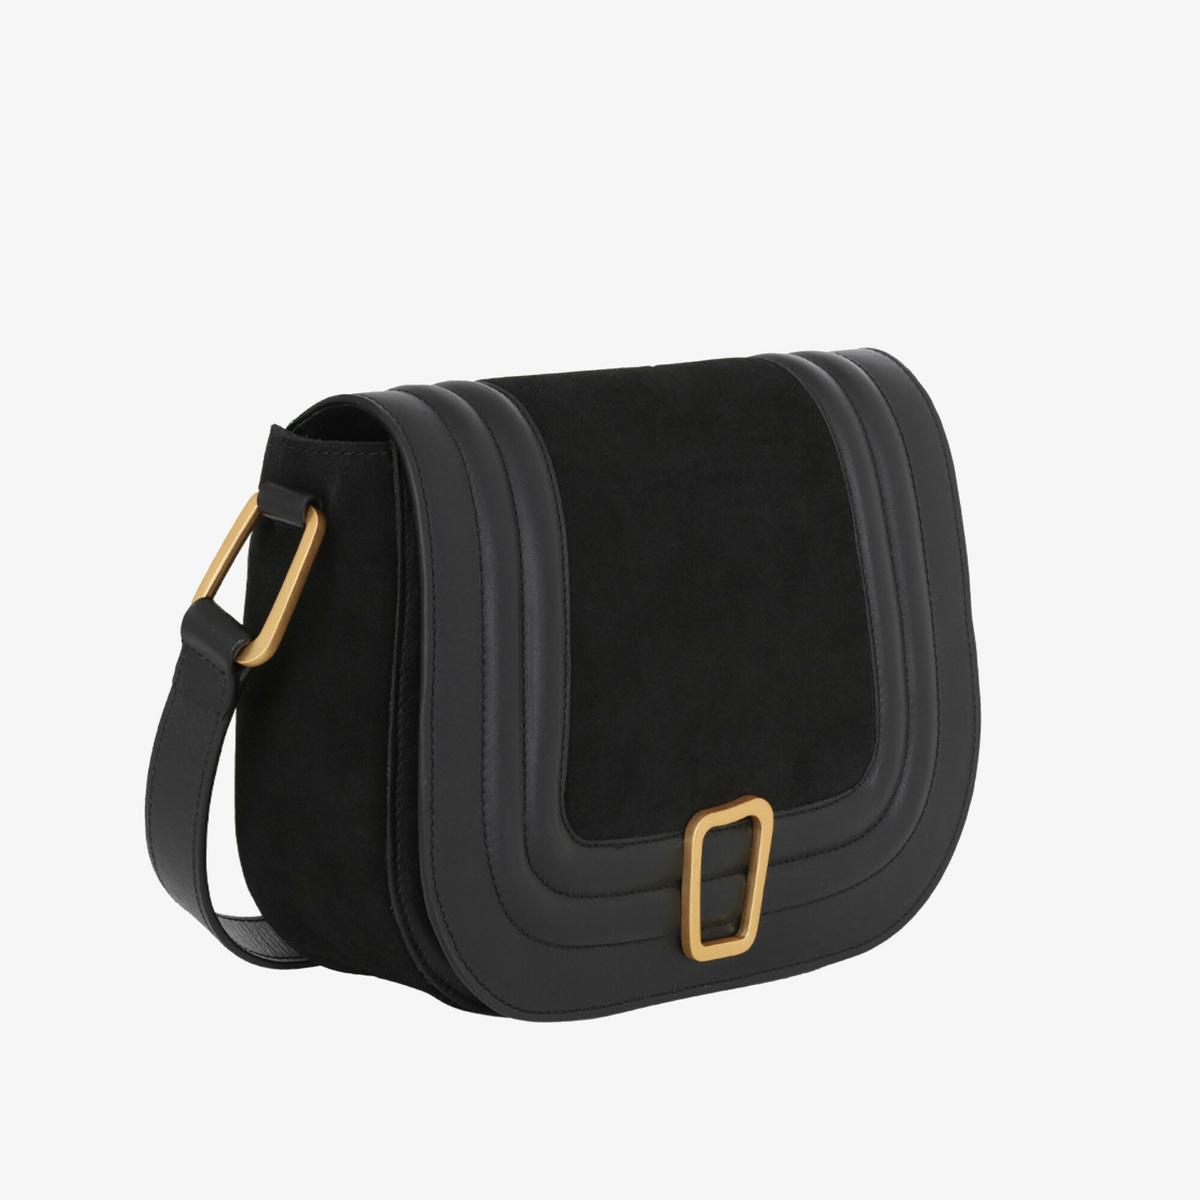 Shoulder bag Barth, Black Classic - W25.5 x H22 x D7 cm - 100% leather  - image 3